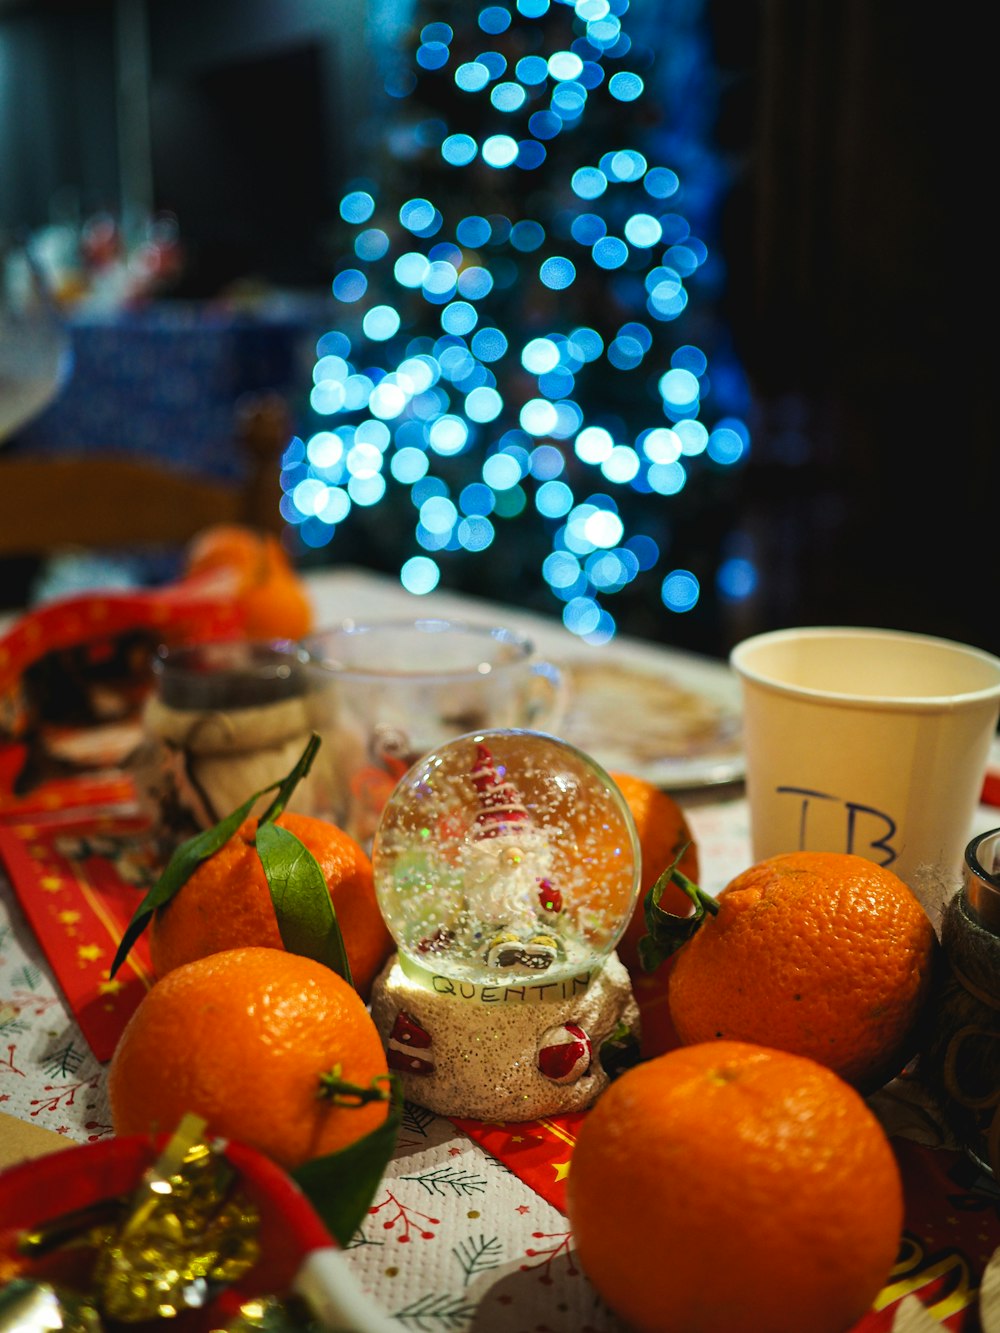 orange fruit beside white ceramic mug